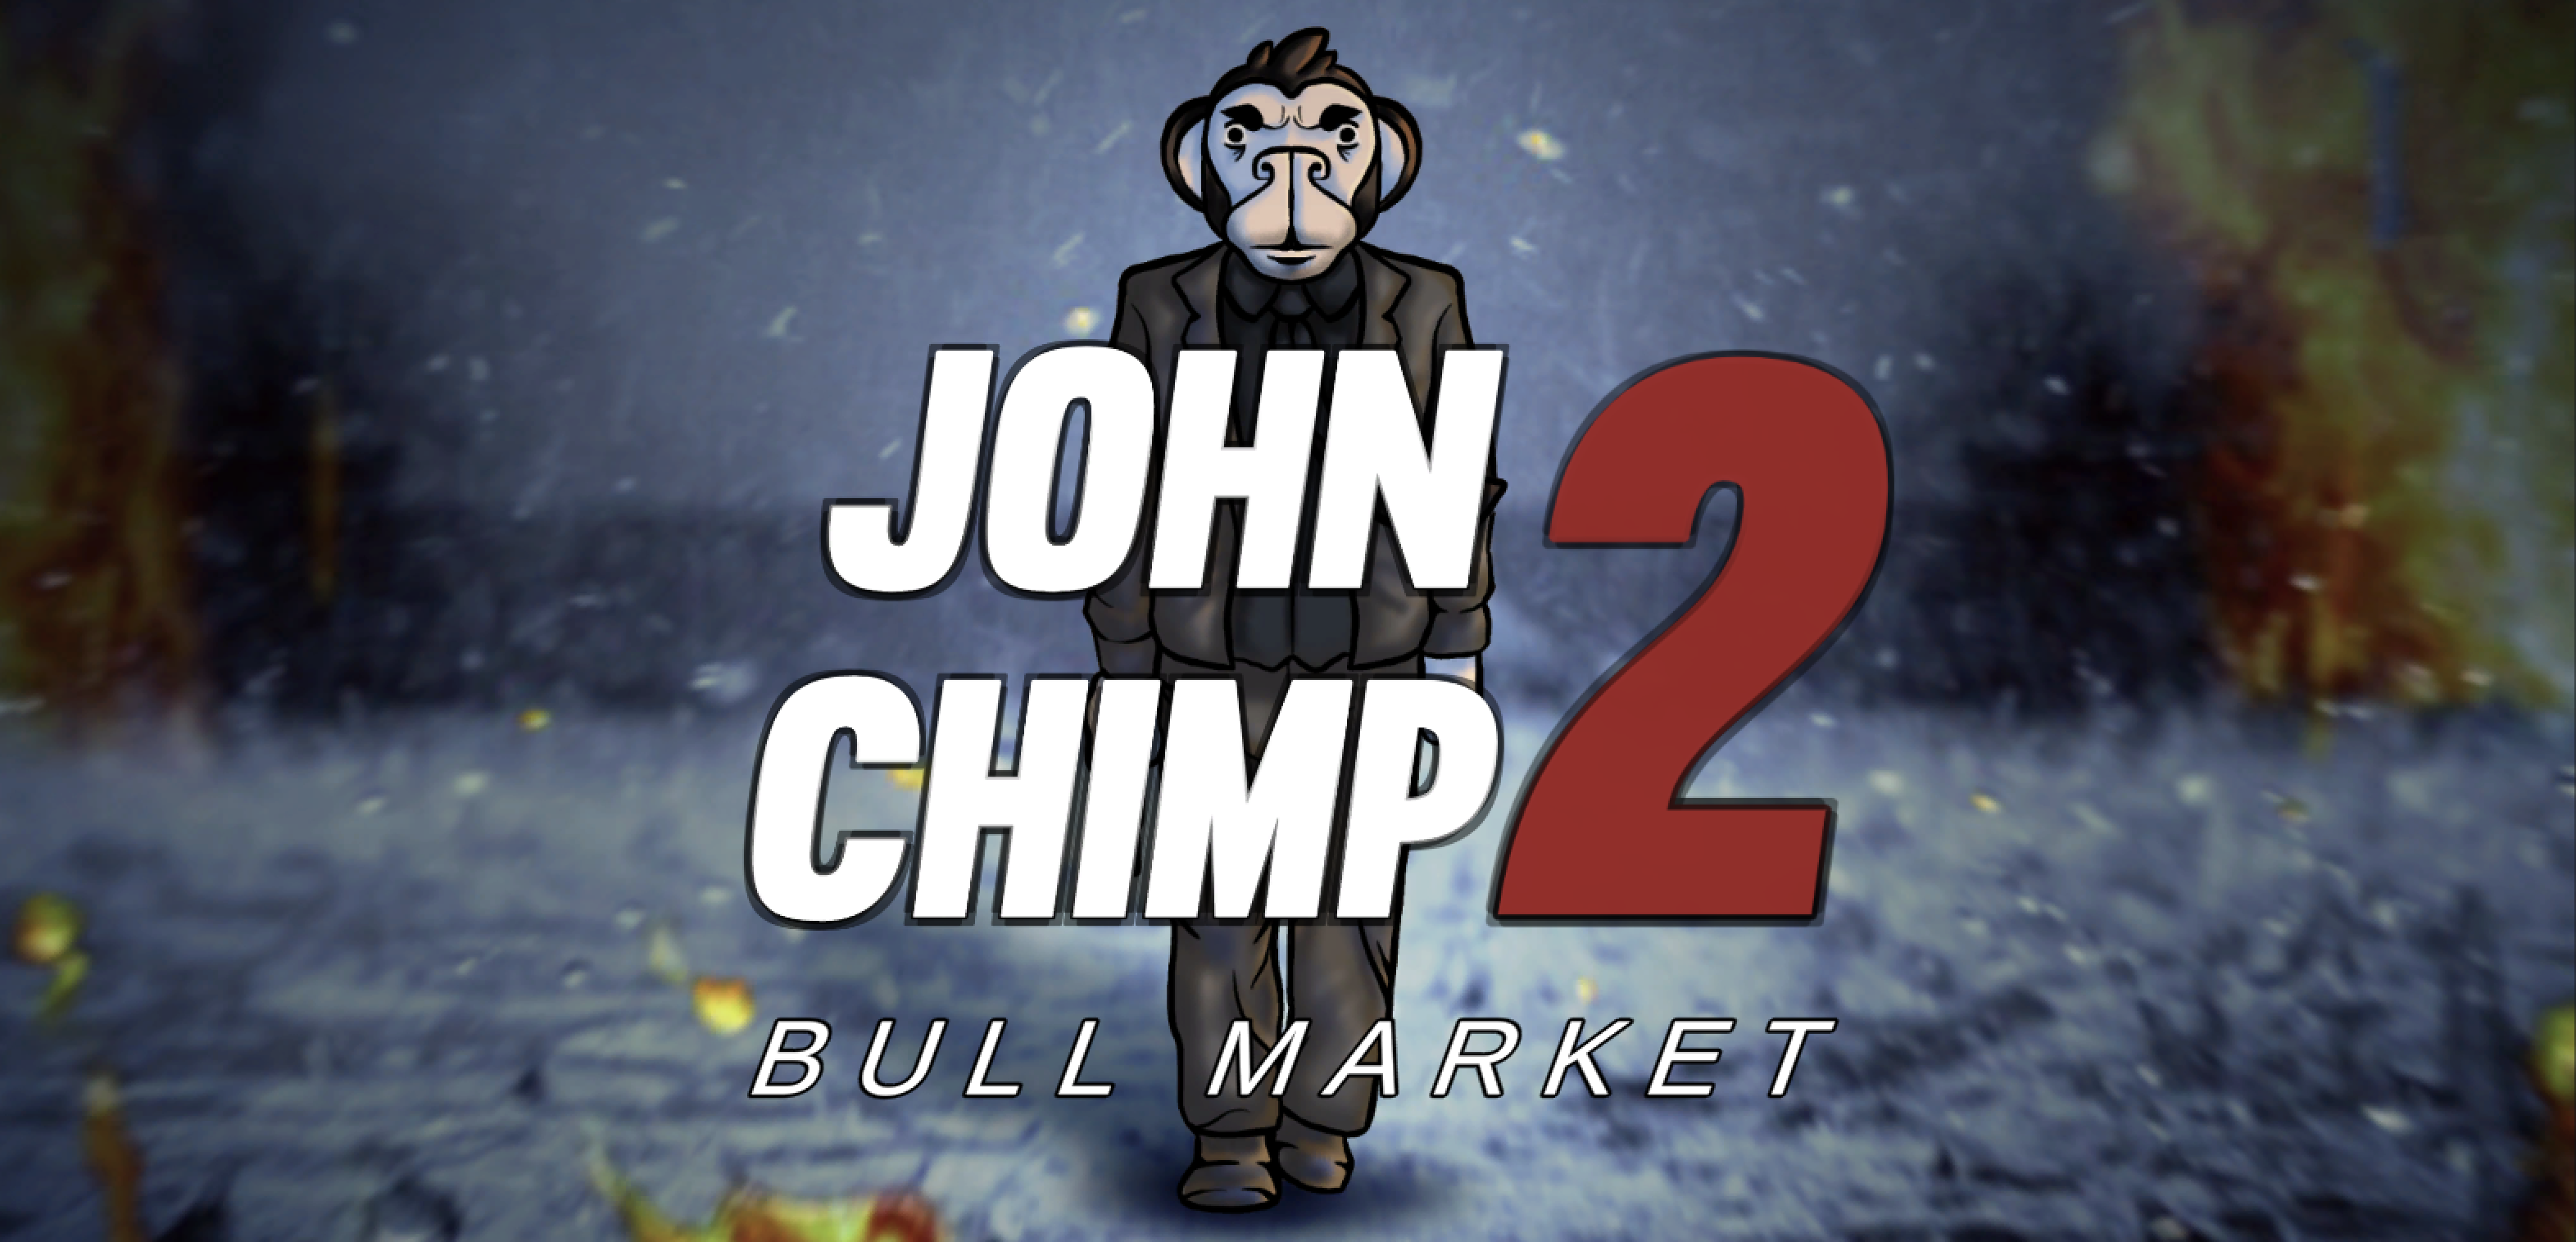 John Chimp 2: Bull Market